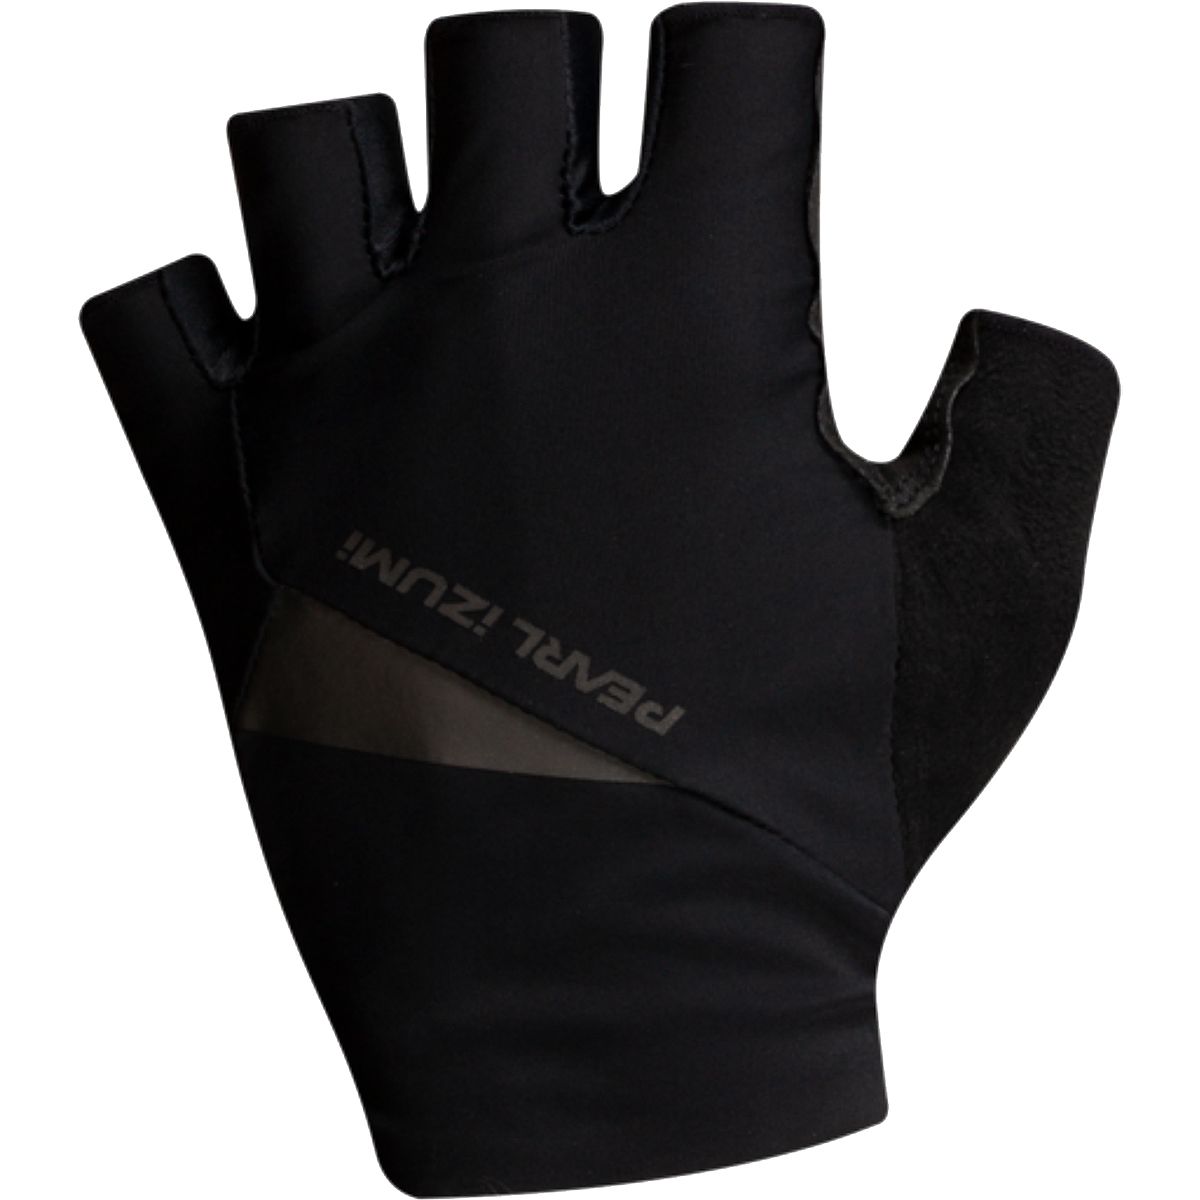 PEARL iZUMi P.R.O. Gel Vent Glove - Men's Black, XS